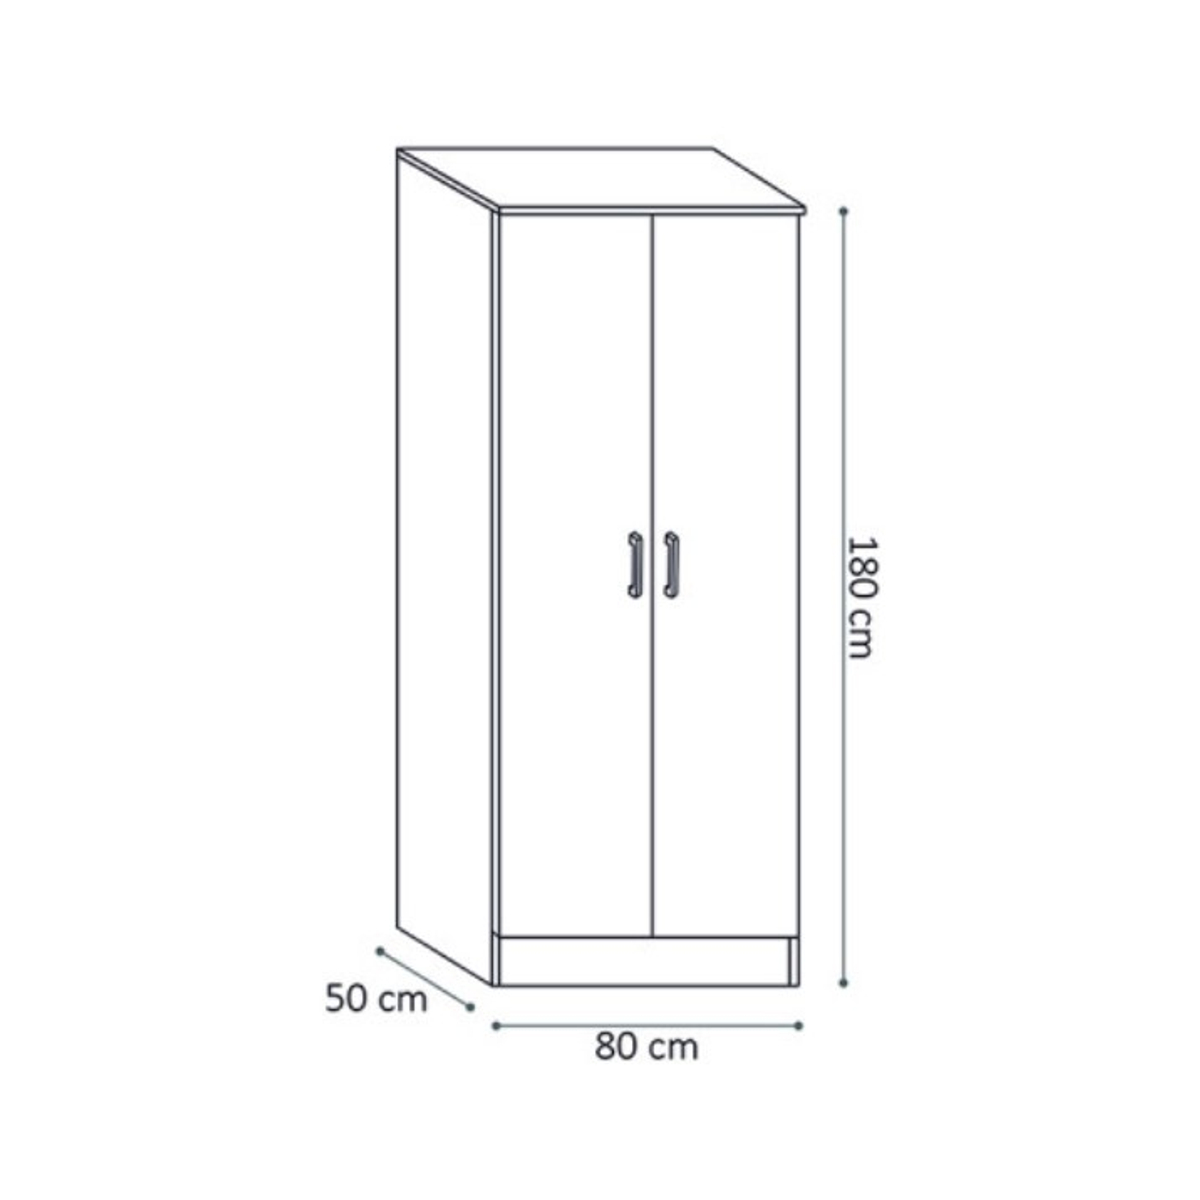 Interiax Kledingkast 'Amelie' 2 deuren Grijze eik (180x80x54cm) 